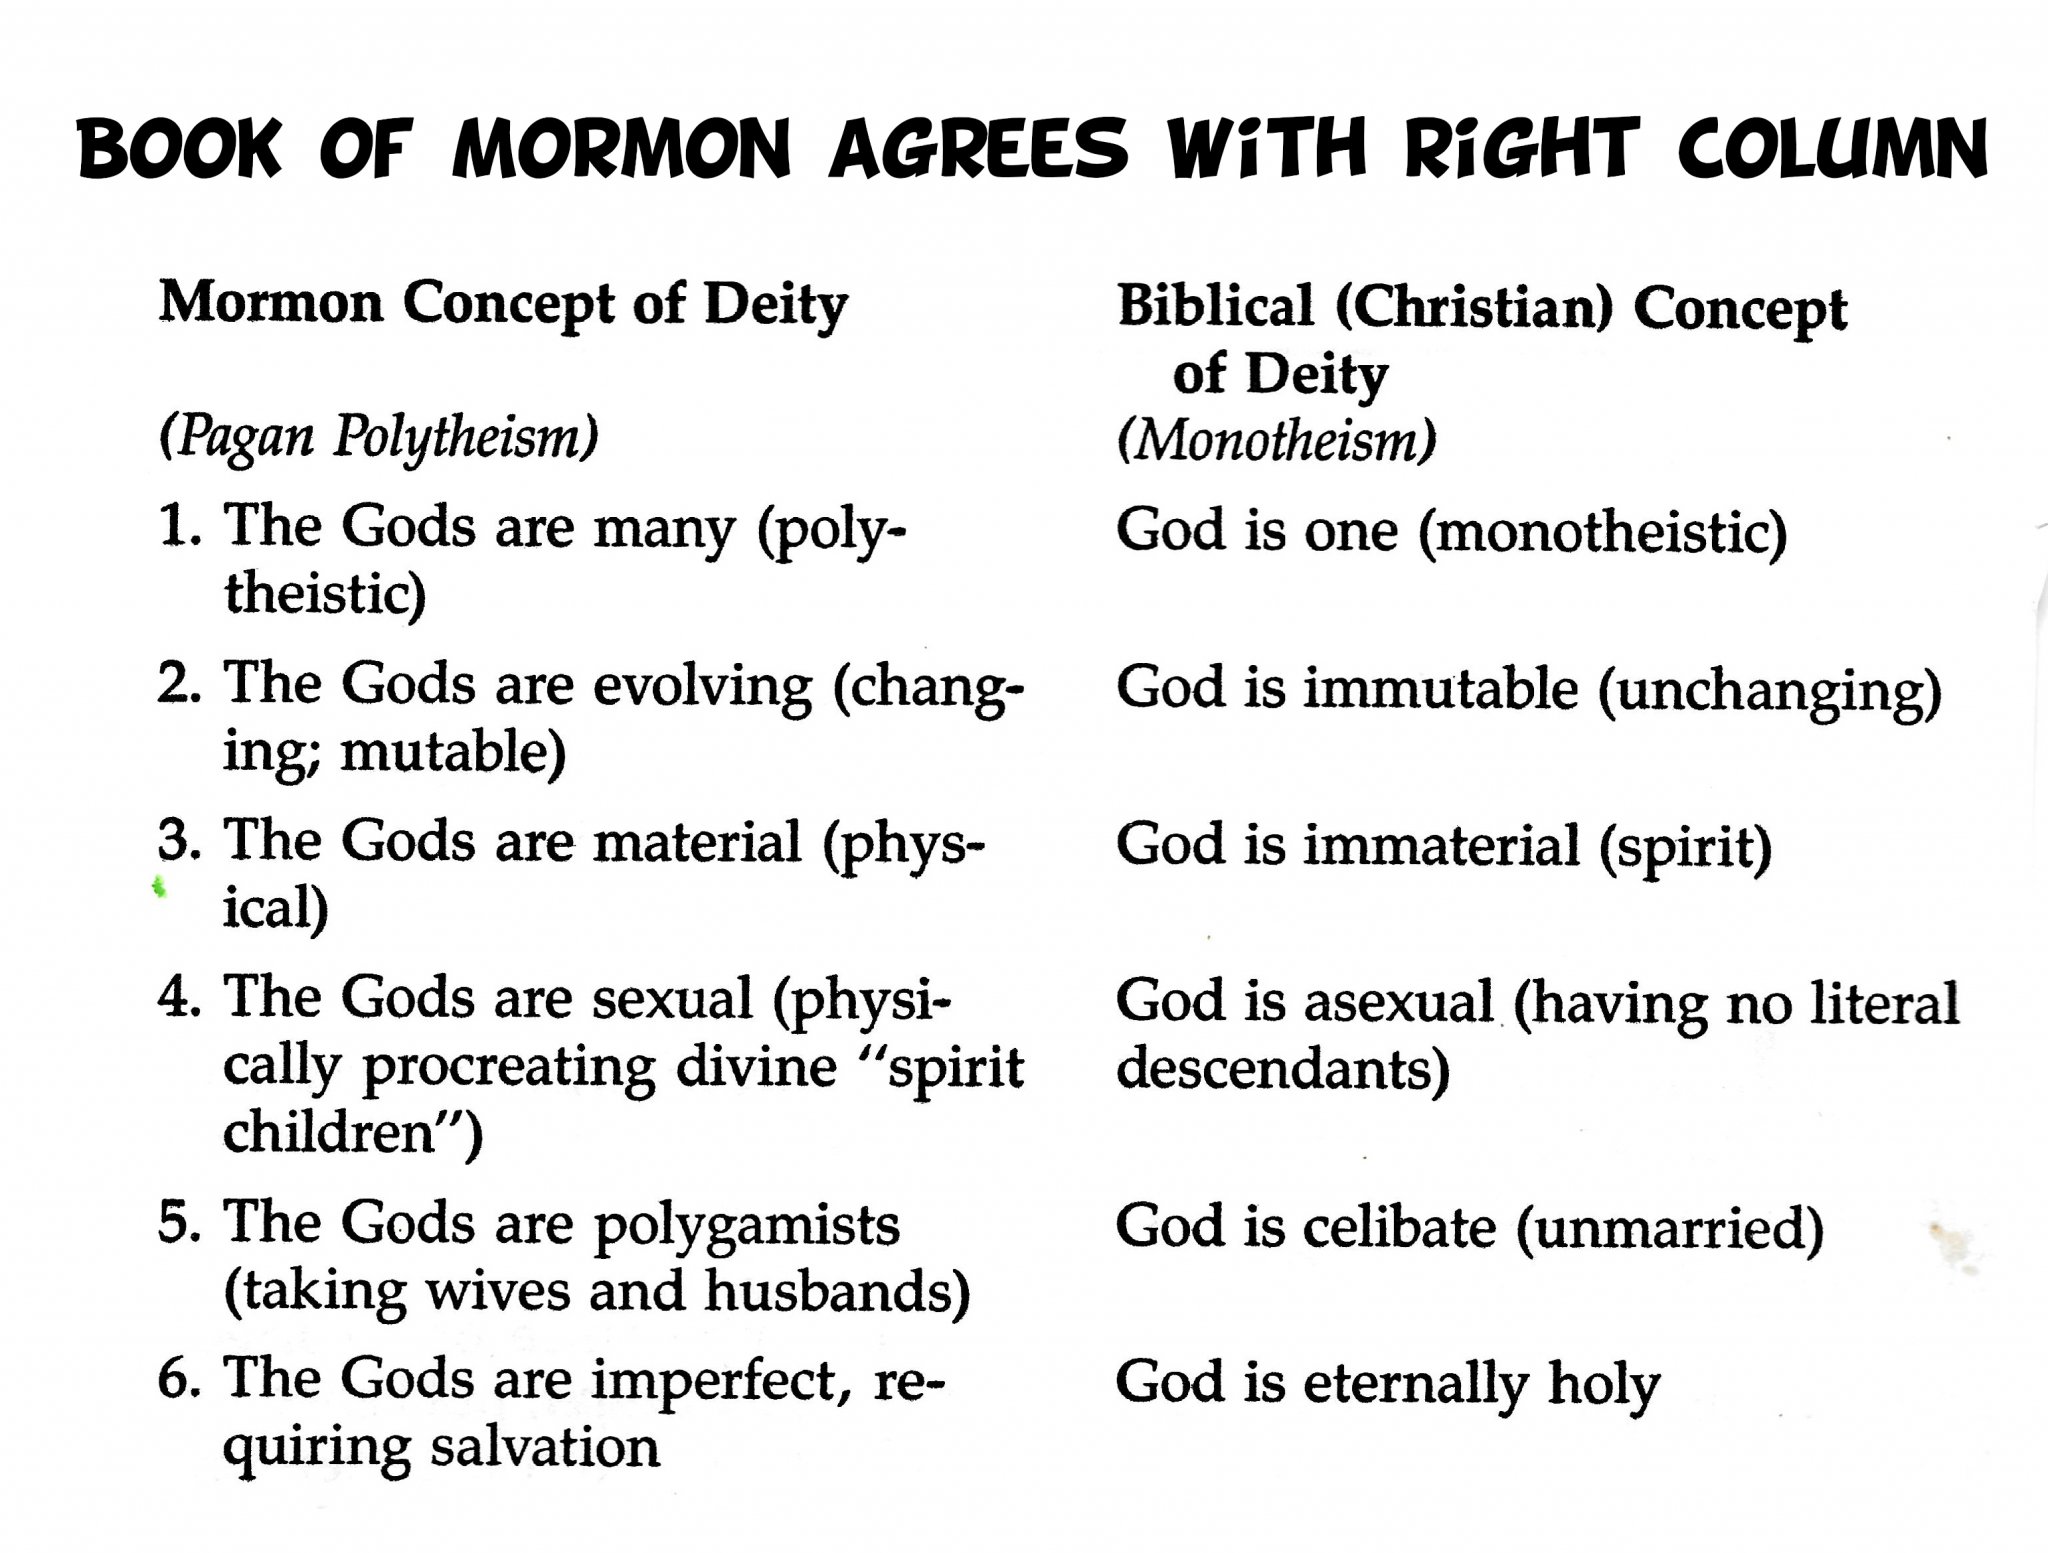 Book of Mormon agrees.jpg